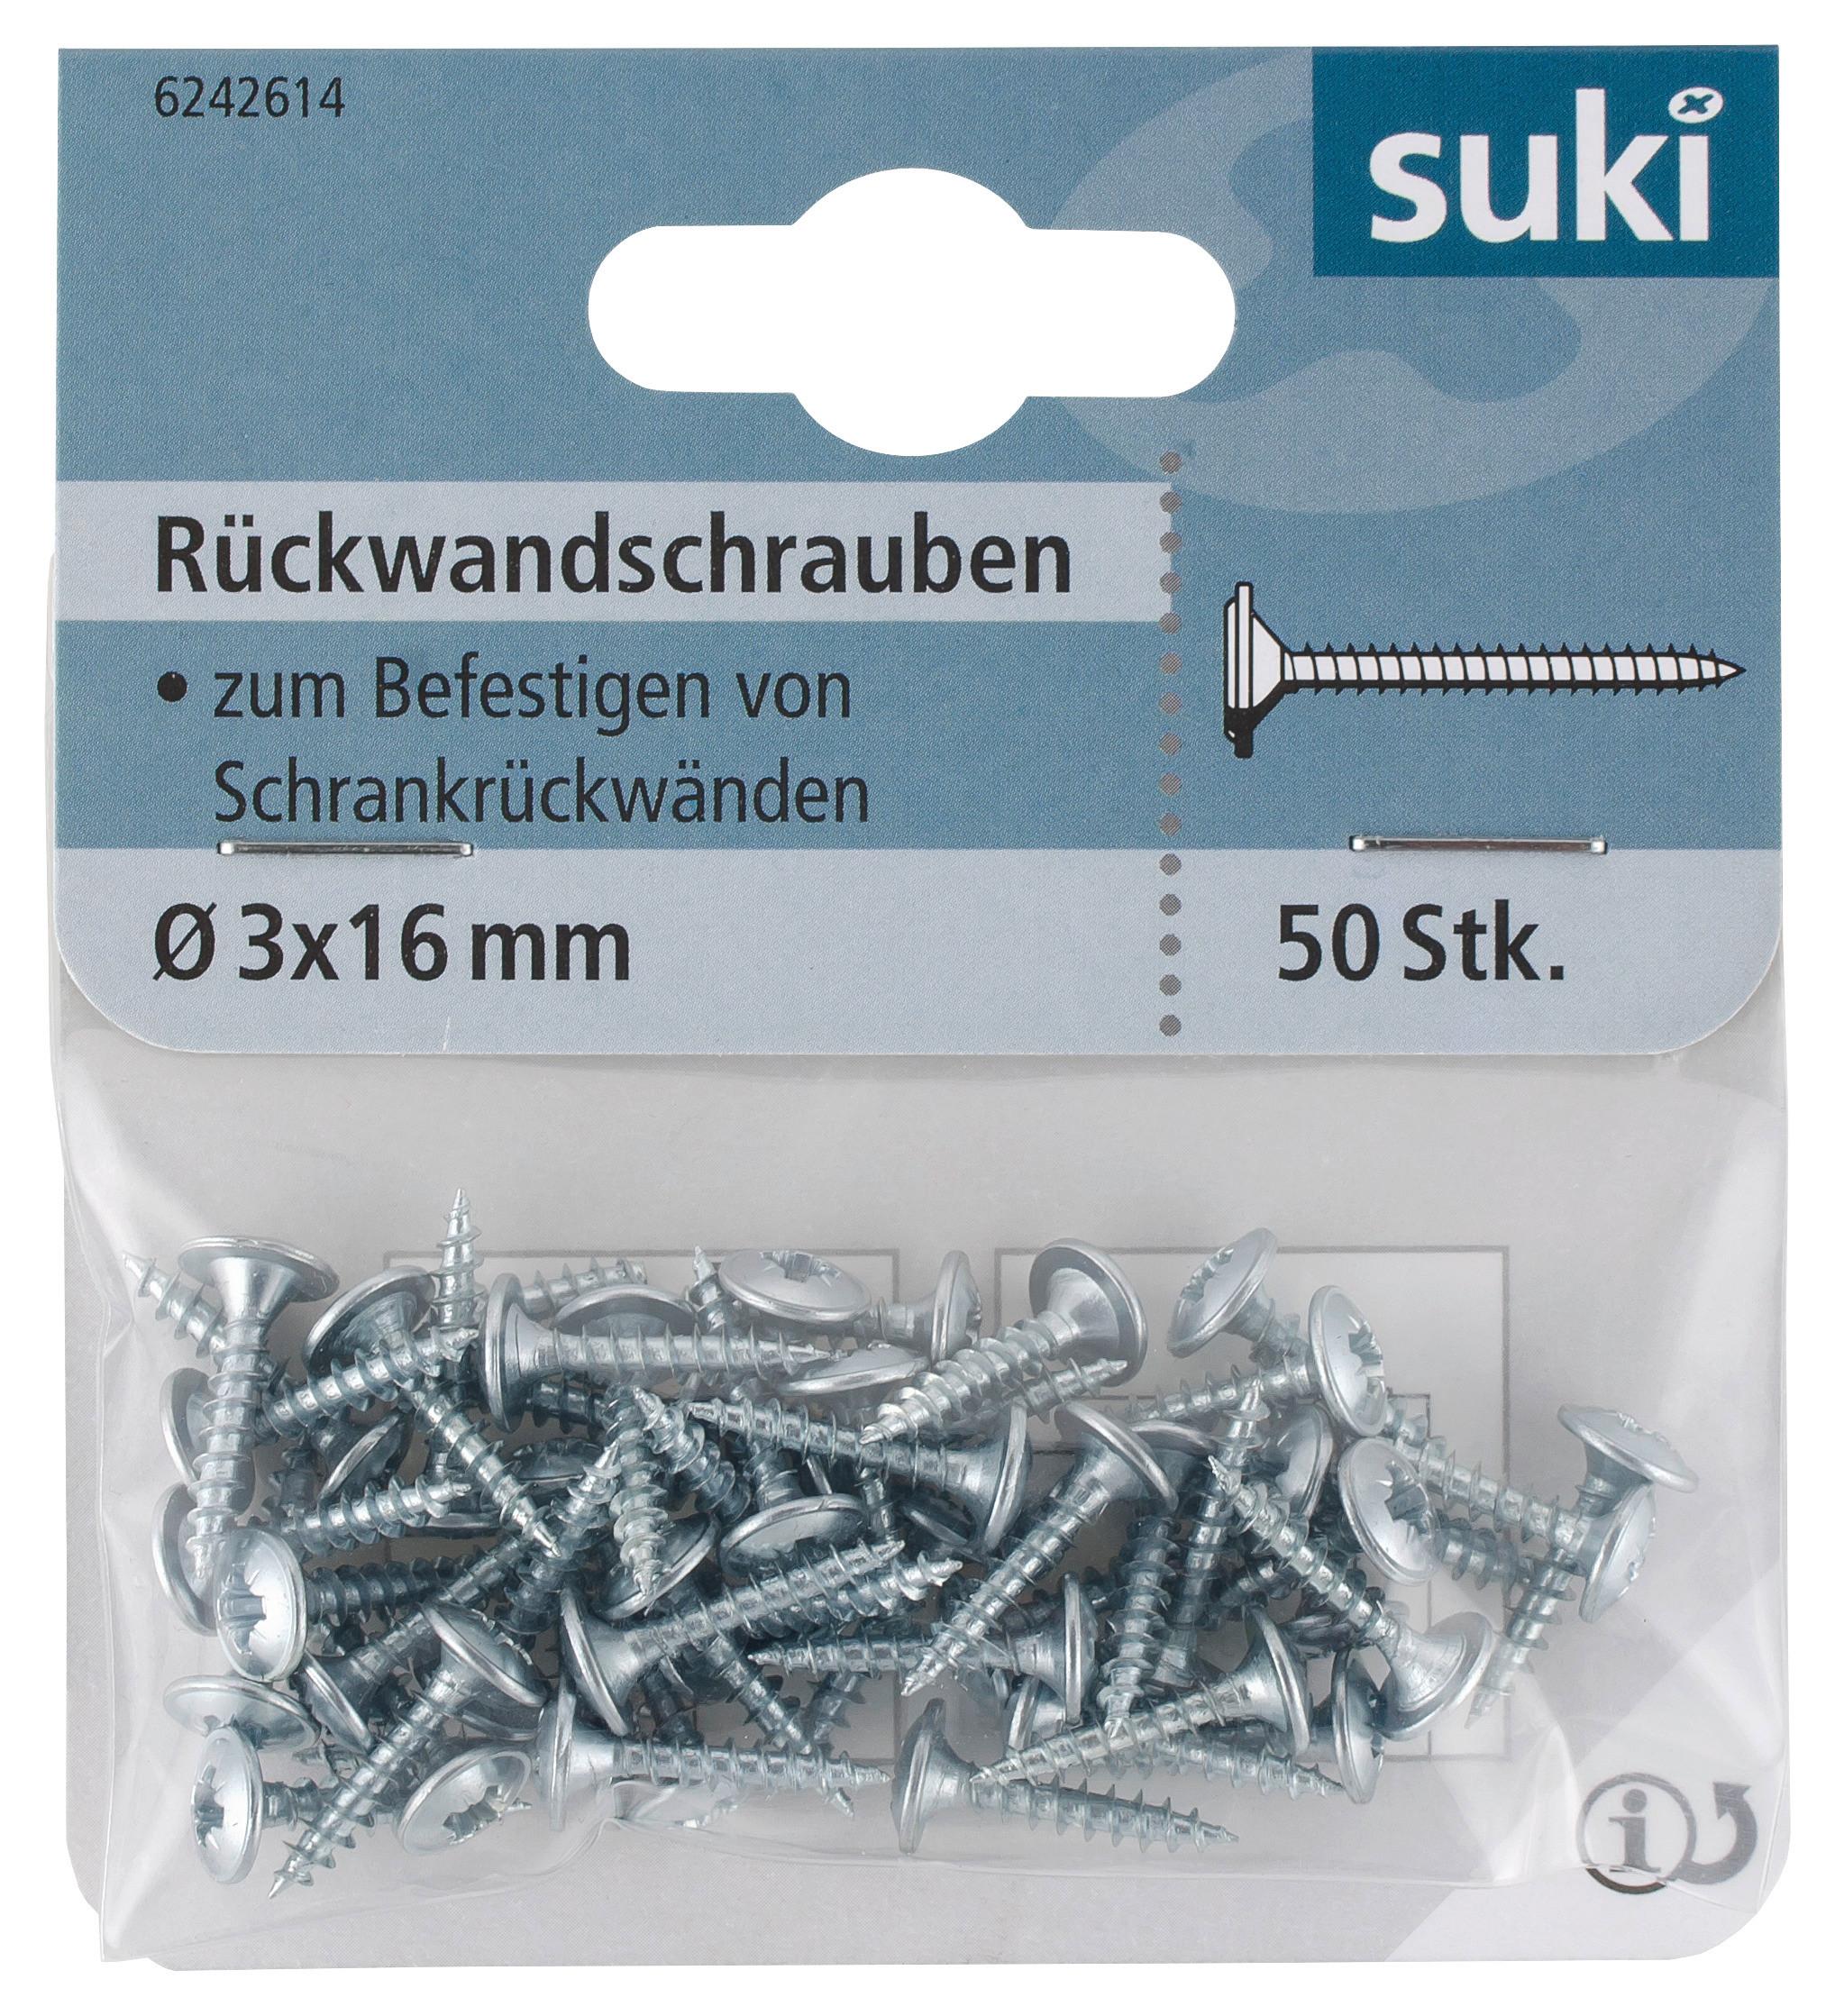 Rückwandschraube aus Stahl L: 1,6 cm, 50 Stk. - Silberfarben, Metall (1,6cm) - Suki